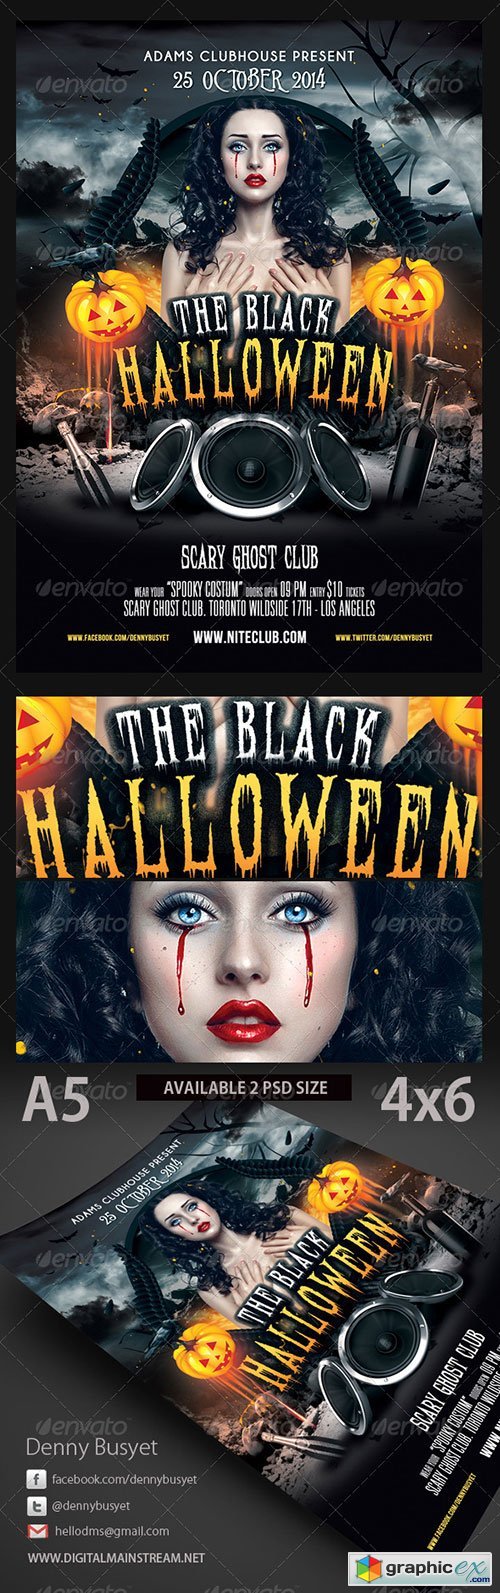 The Black Halloween Psd Flyer Template